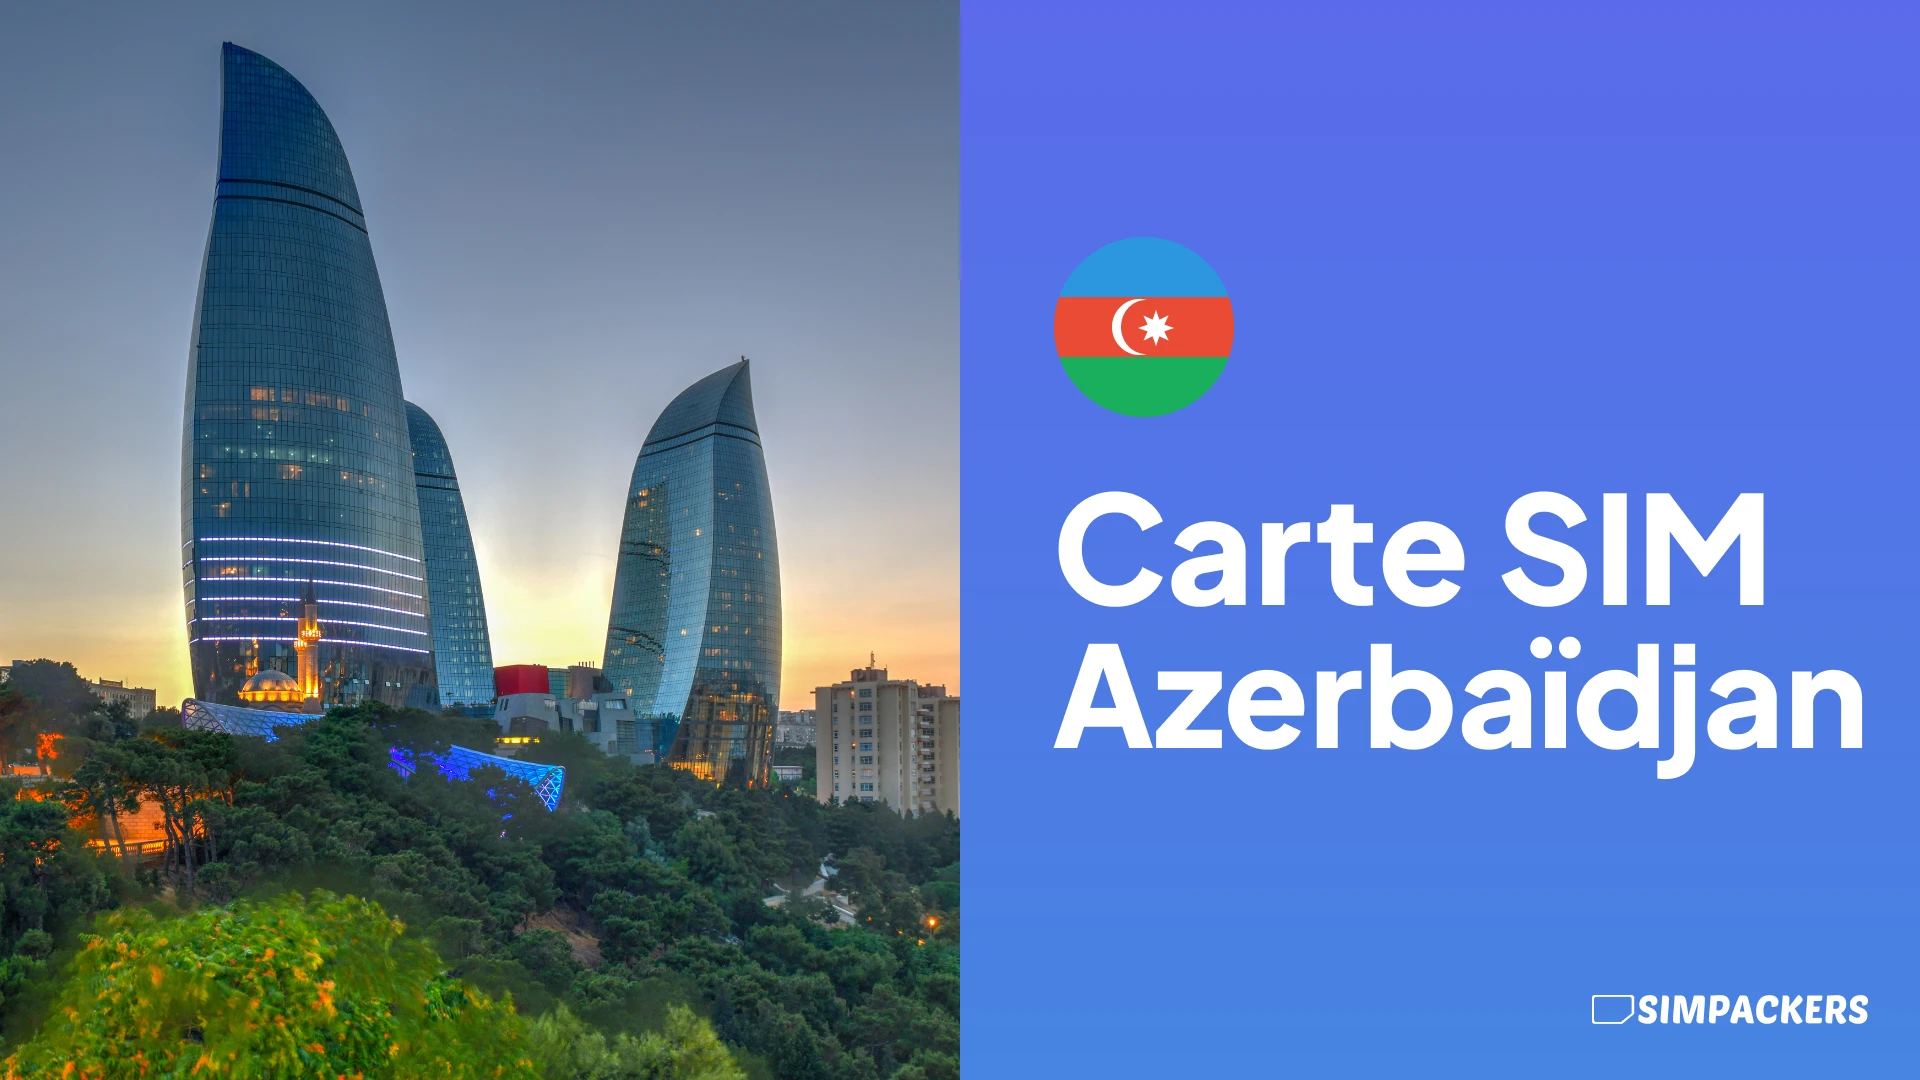 FR/FEATURED_IMAGES/carte-sim-azerbaidjan.webp